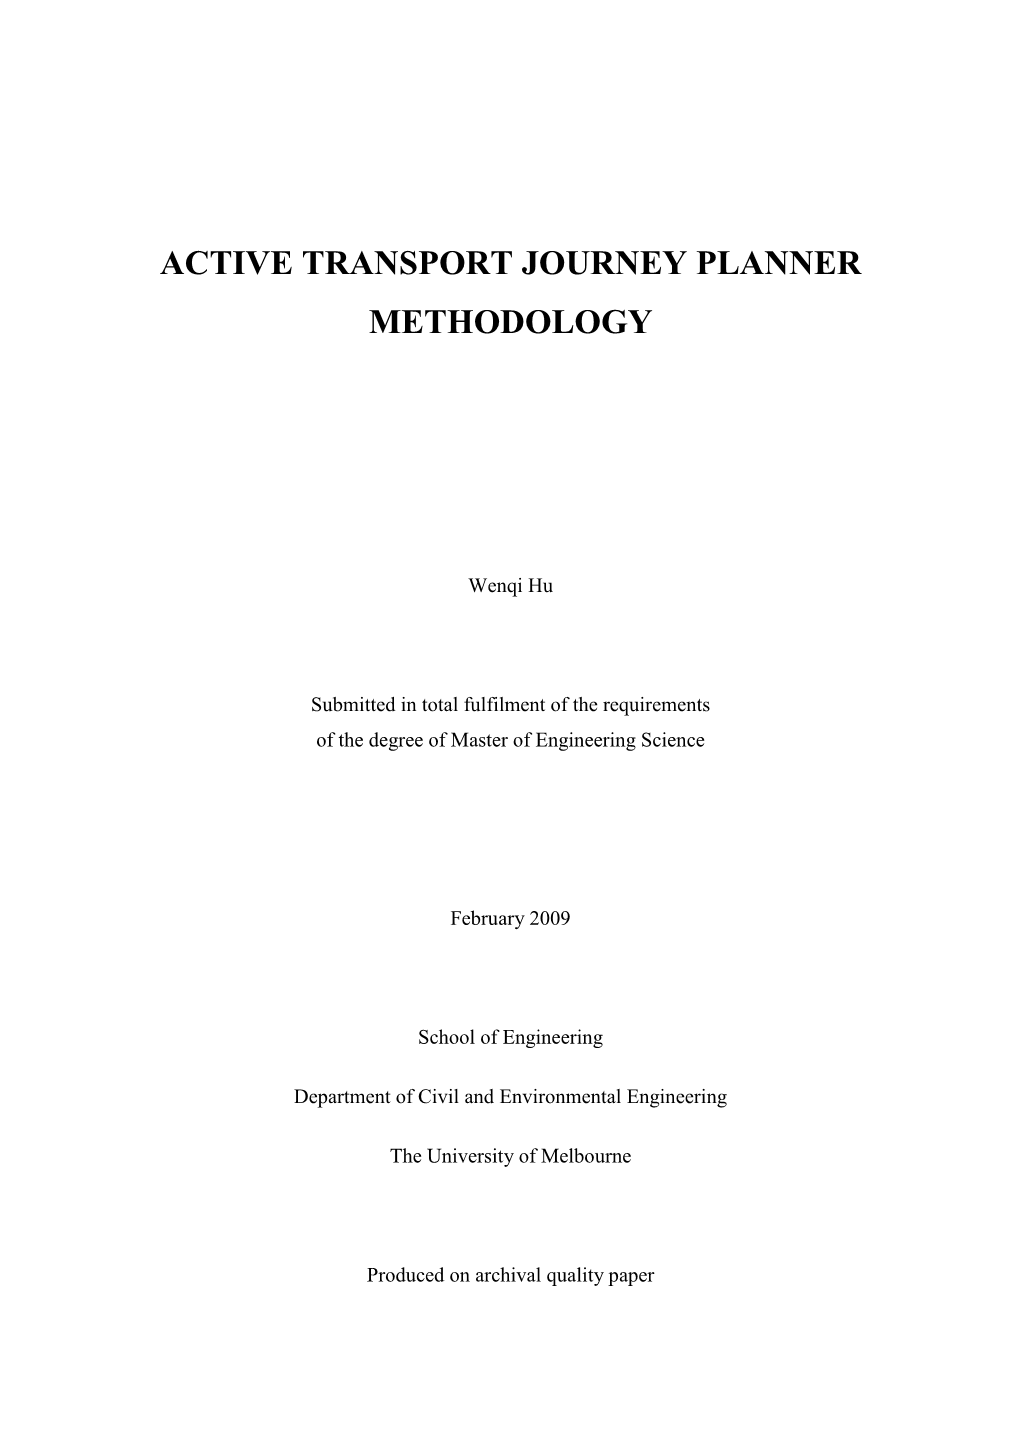 Active Transport Journey Planner Methodology